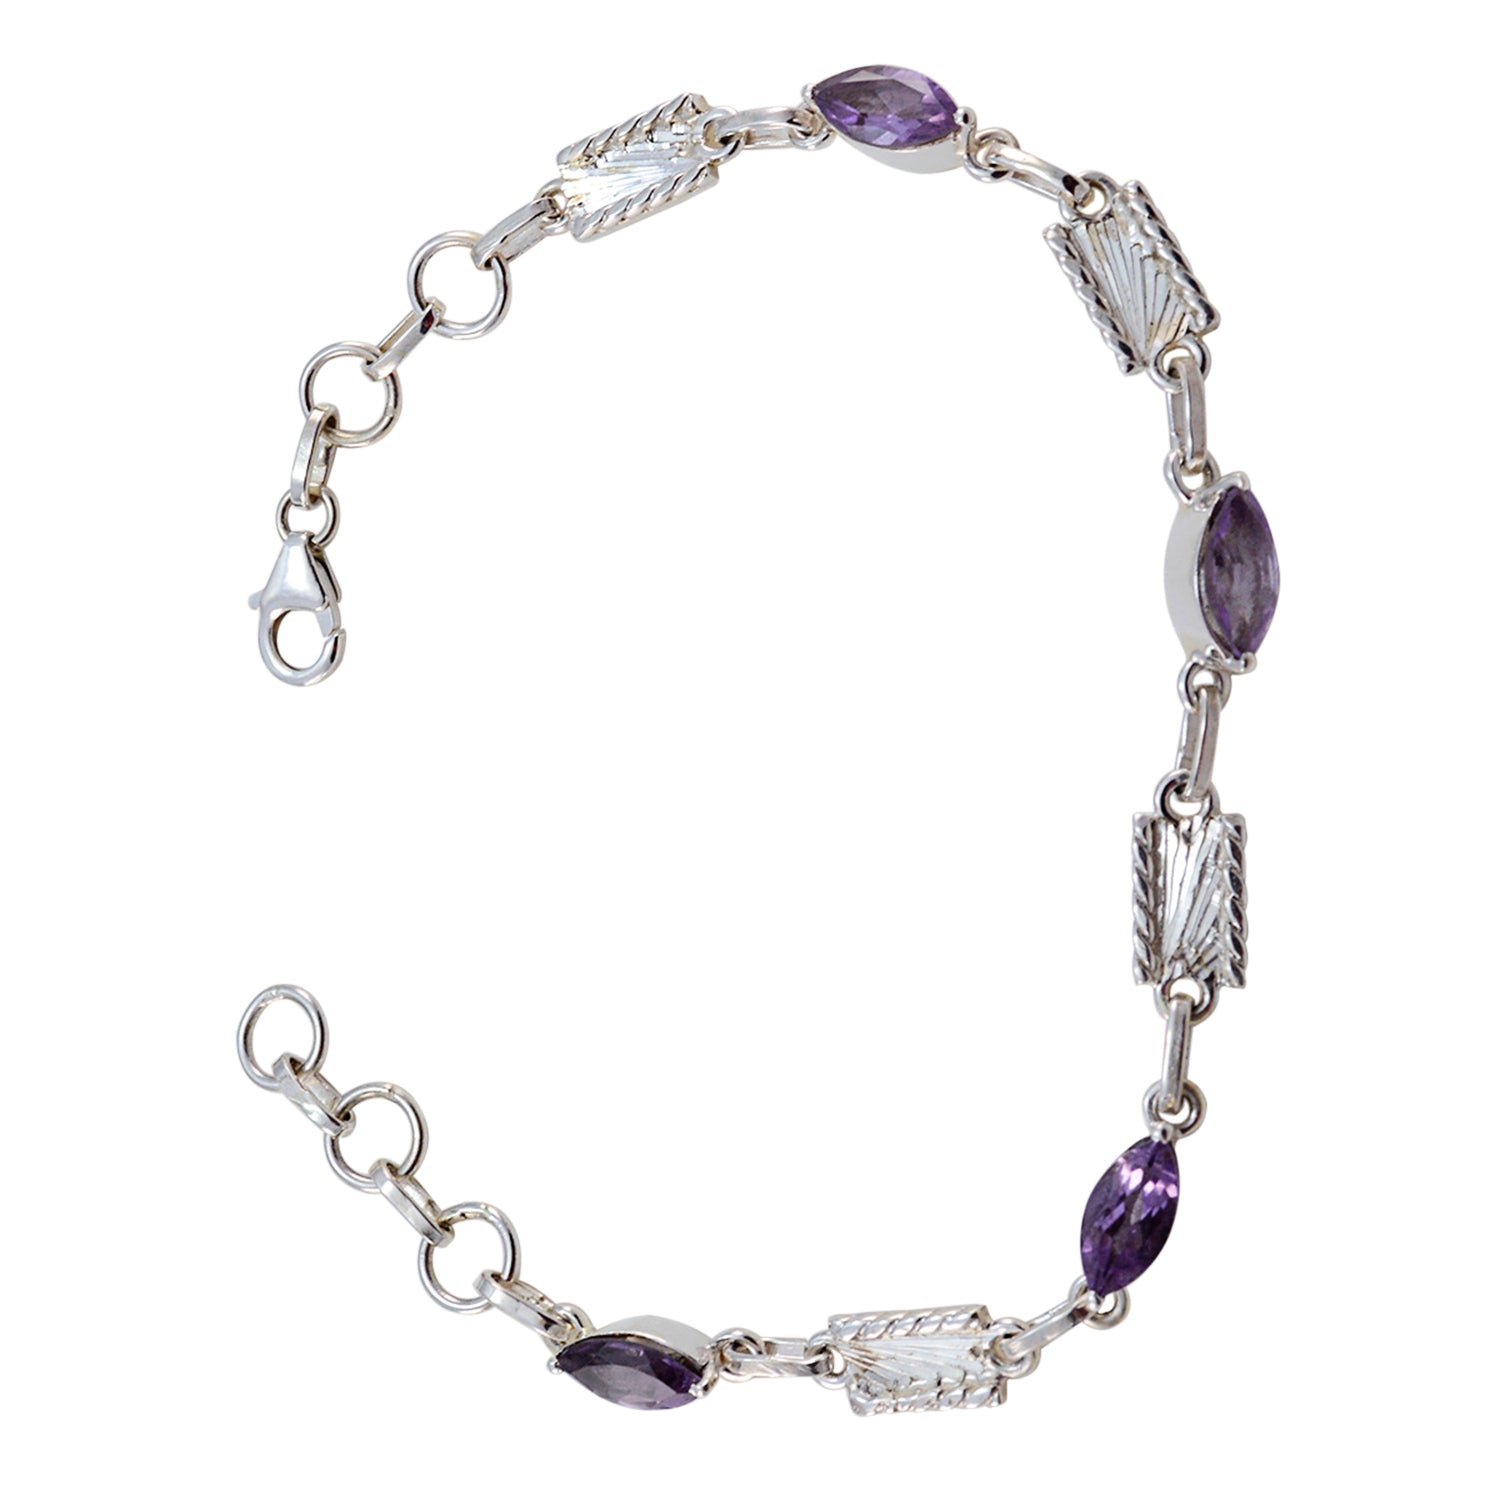 Riyo Nice Gemstone Marquise Faceted Purple Amethyst Silver Bracelet mothers day gift